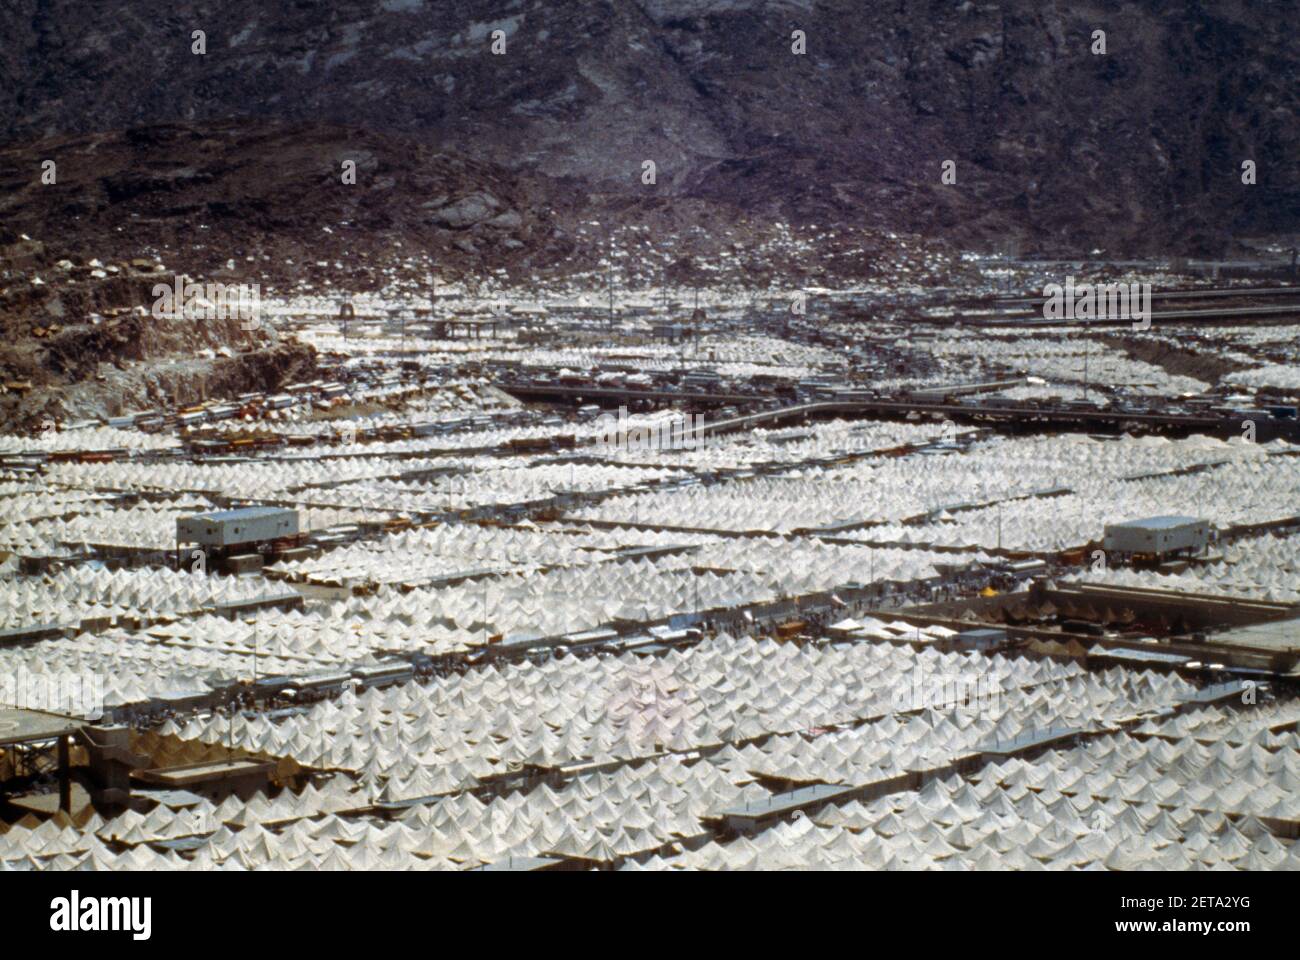 Makkah Hajj Saudi-Arabien Islamische Stadt Mit Zelt Jährliche Pilgerfahrt Luftbild Anzeigen Stockfoto